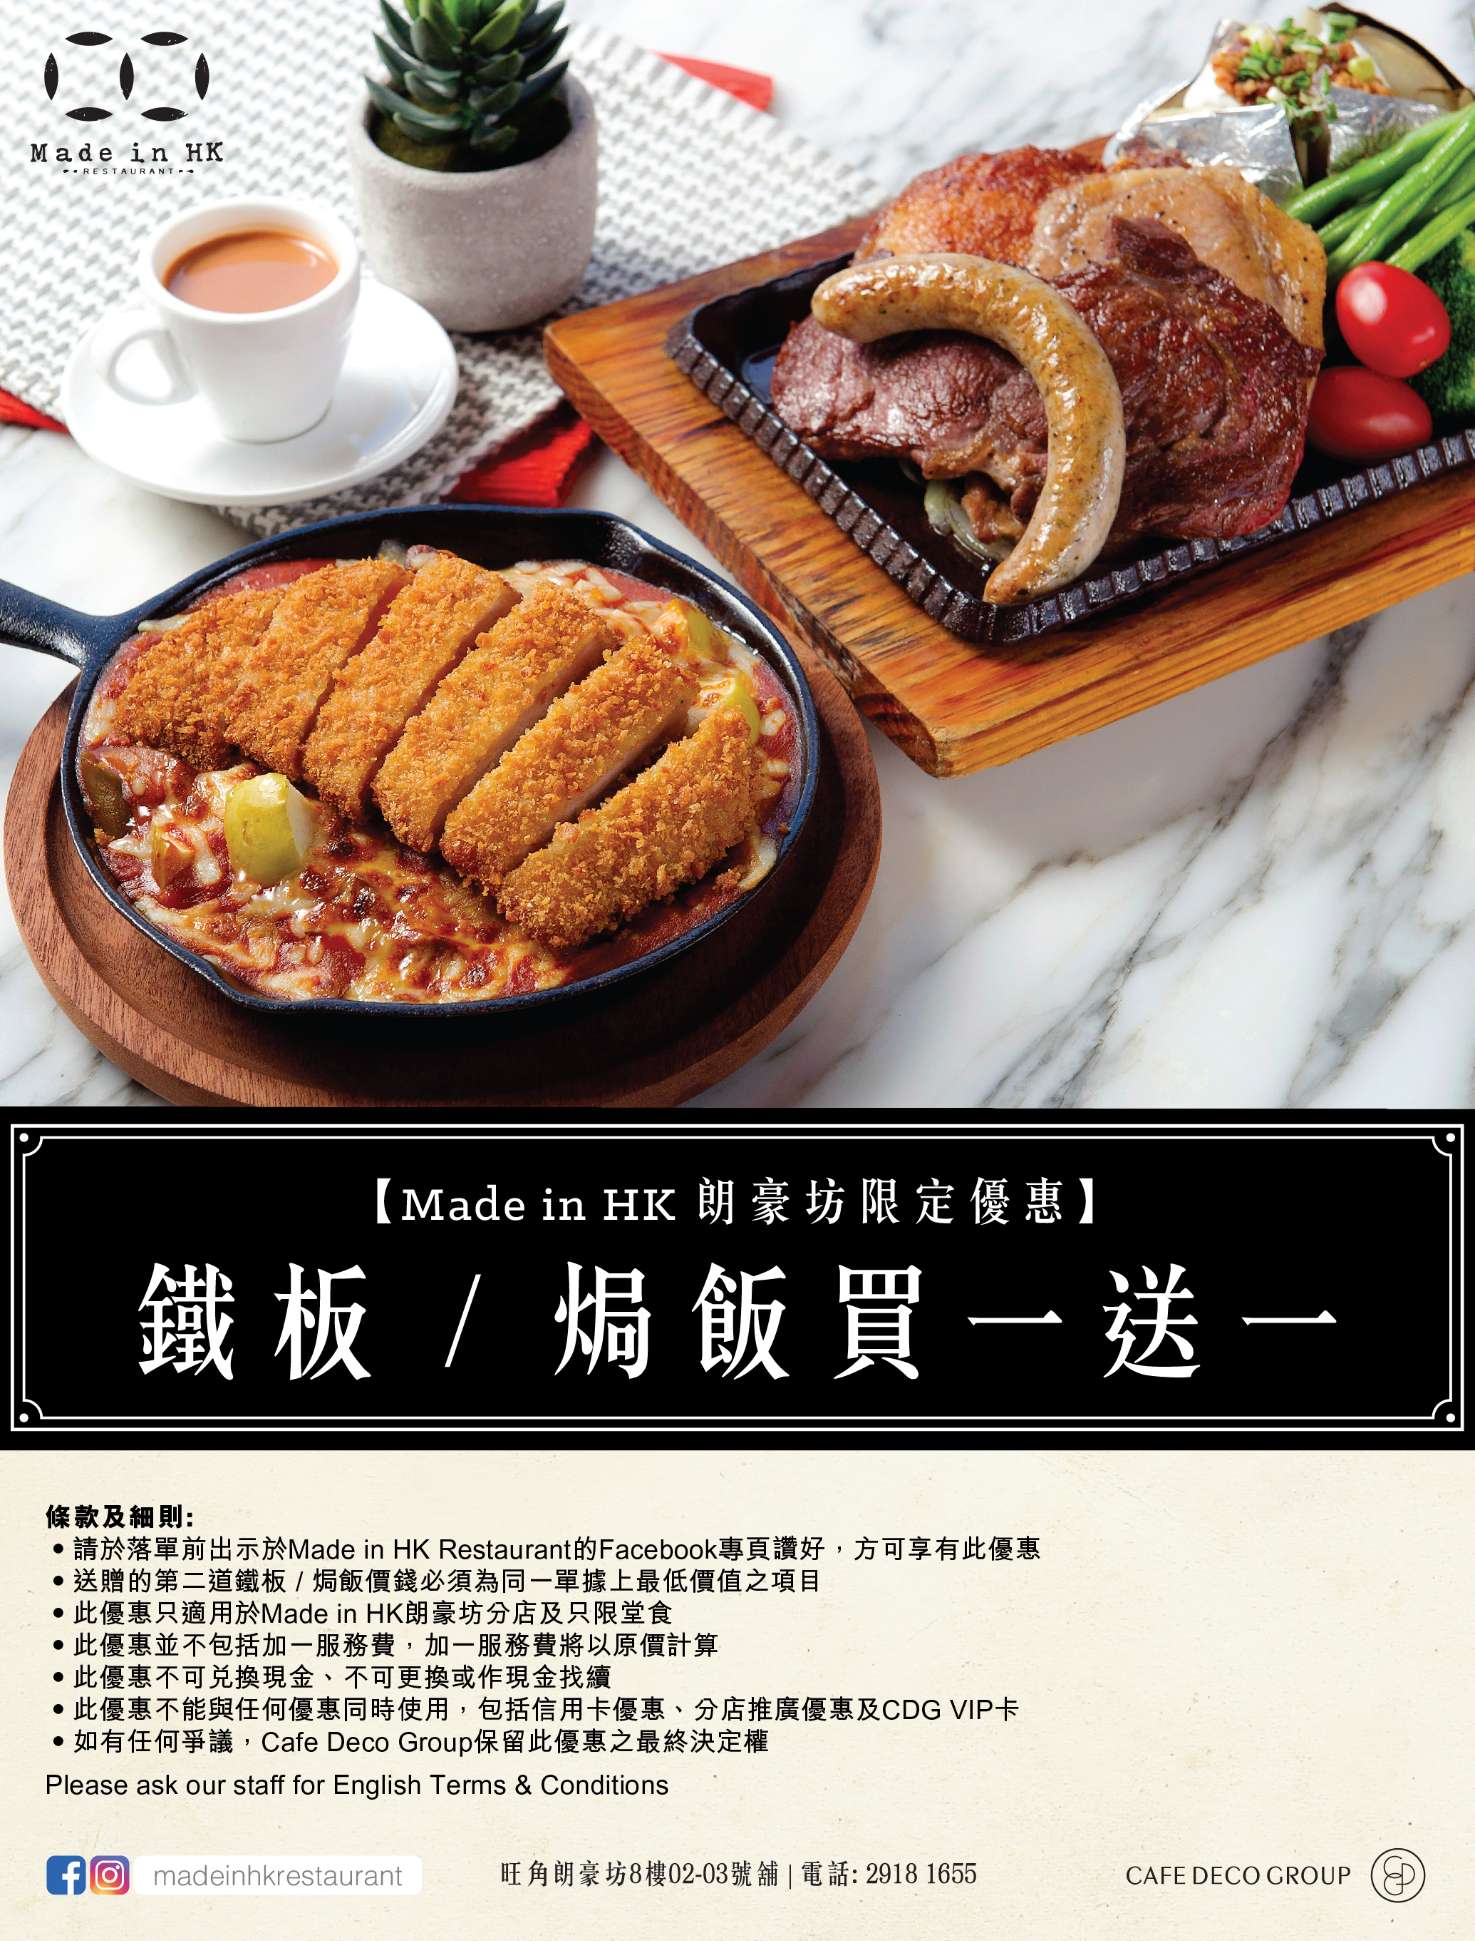 Made in HK Restaurant 鐵板及焗飯買1送1優惠(至18年11月14日)圖片1